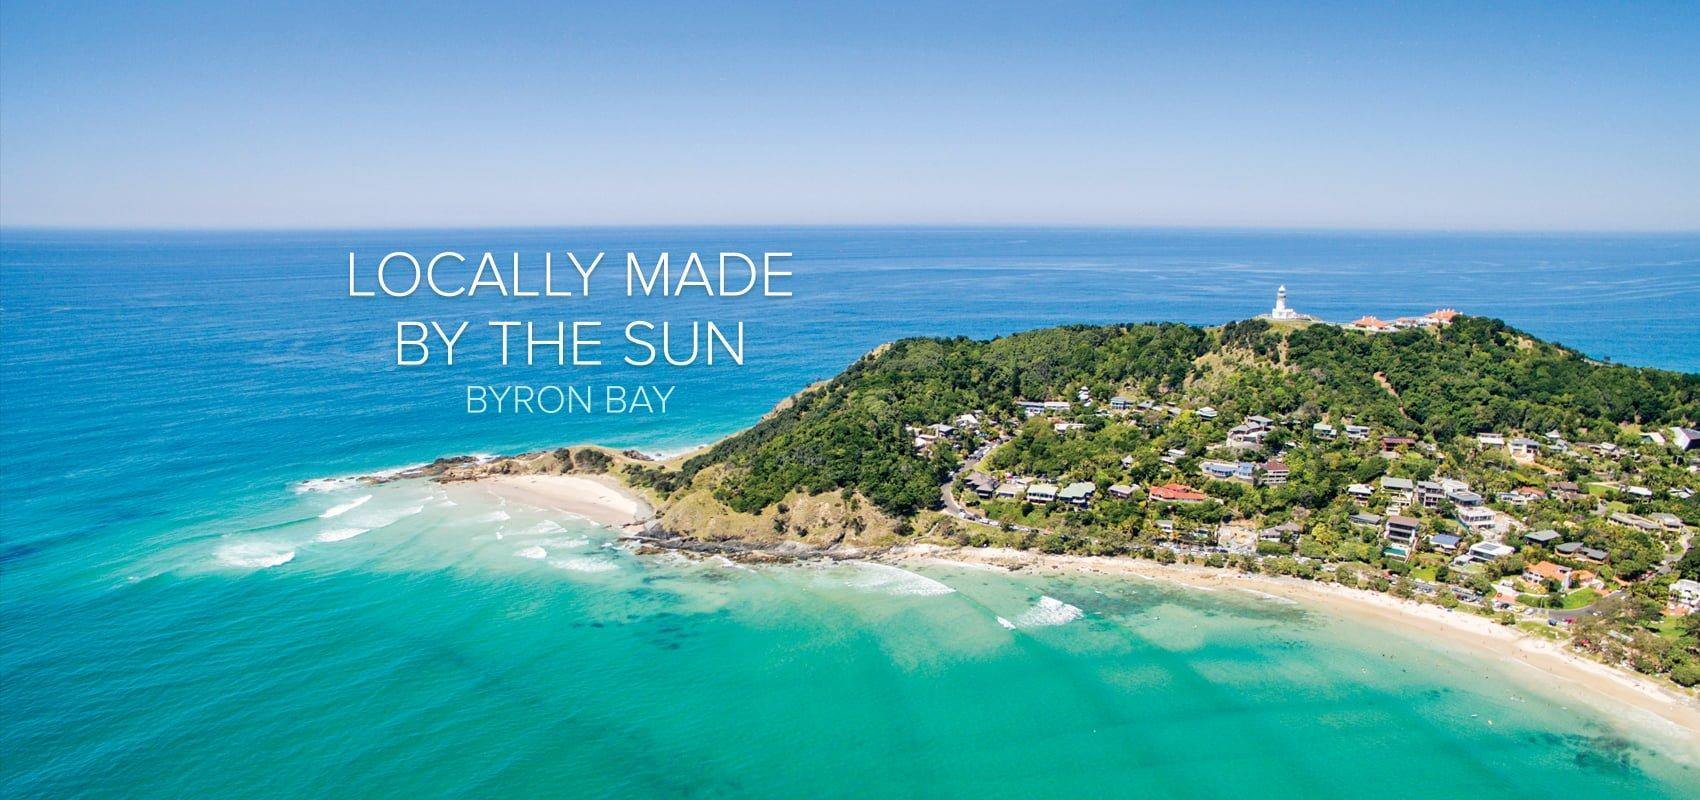 Summer Campaign - "Locally made by the Sun – Byron Bay" - Brookfarm